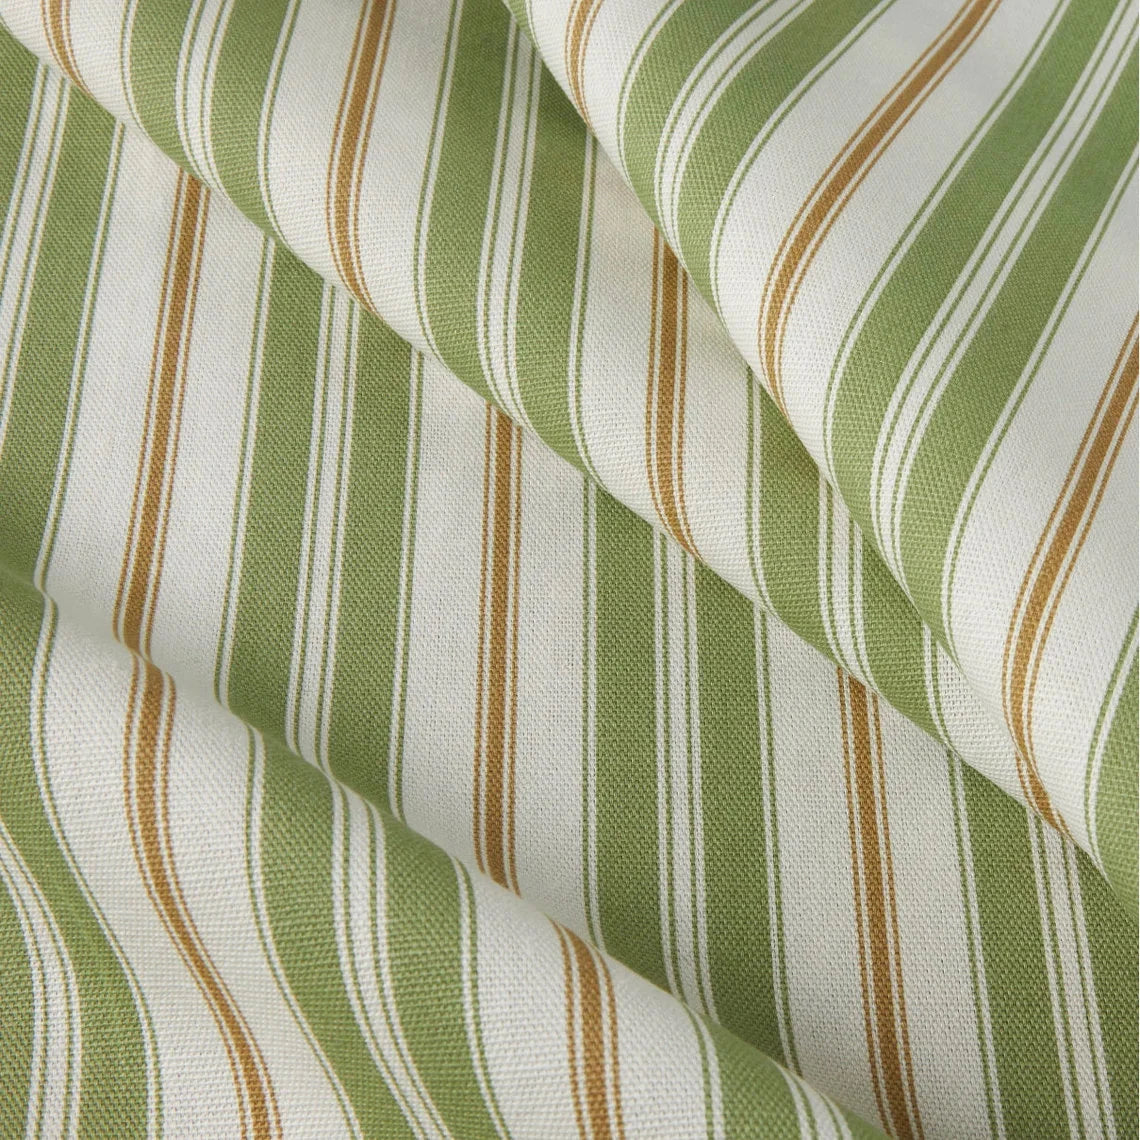 tab top curtain panels pair in newbury aloe green stripe- green, brown, white